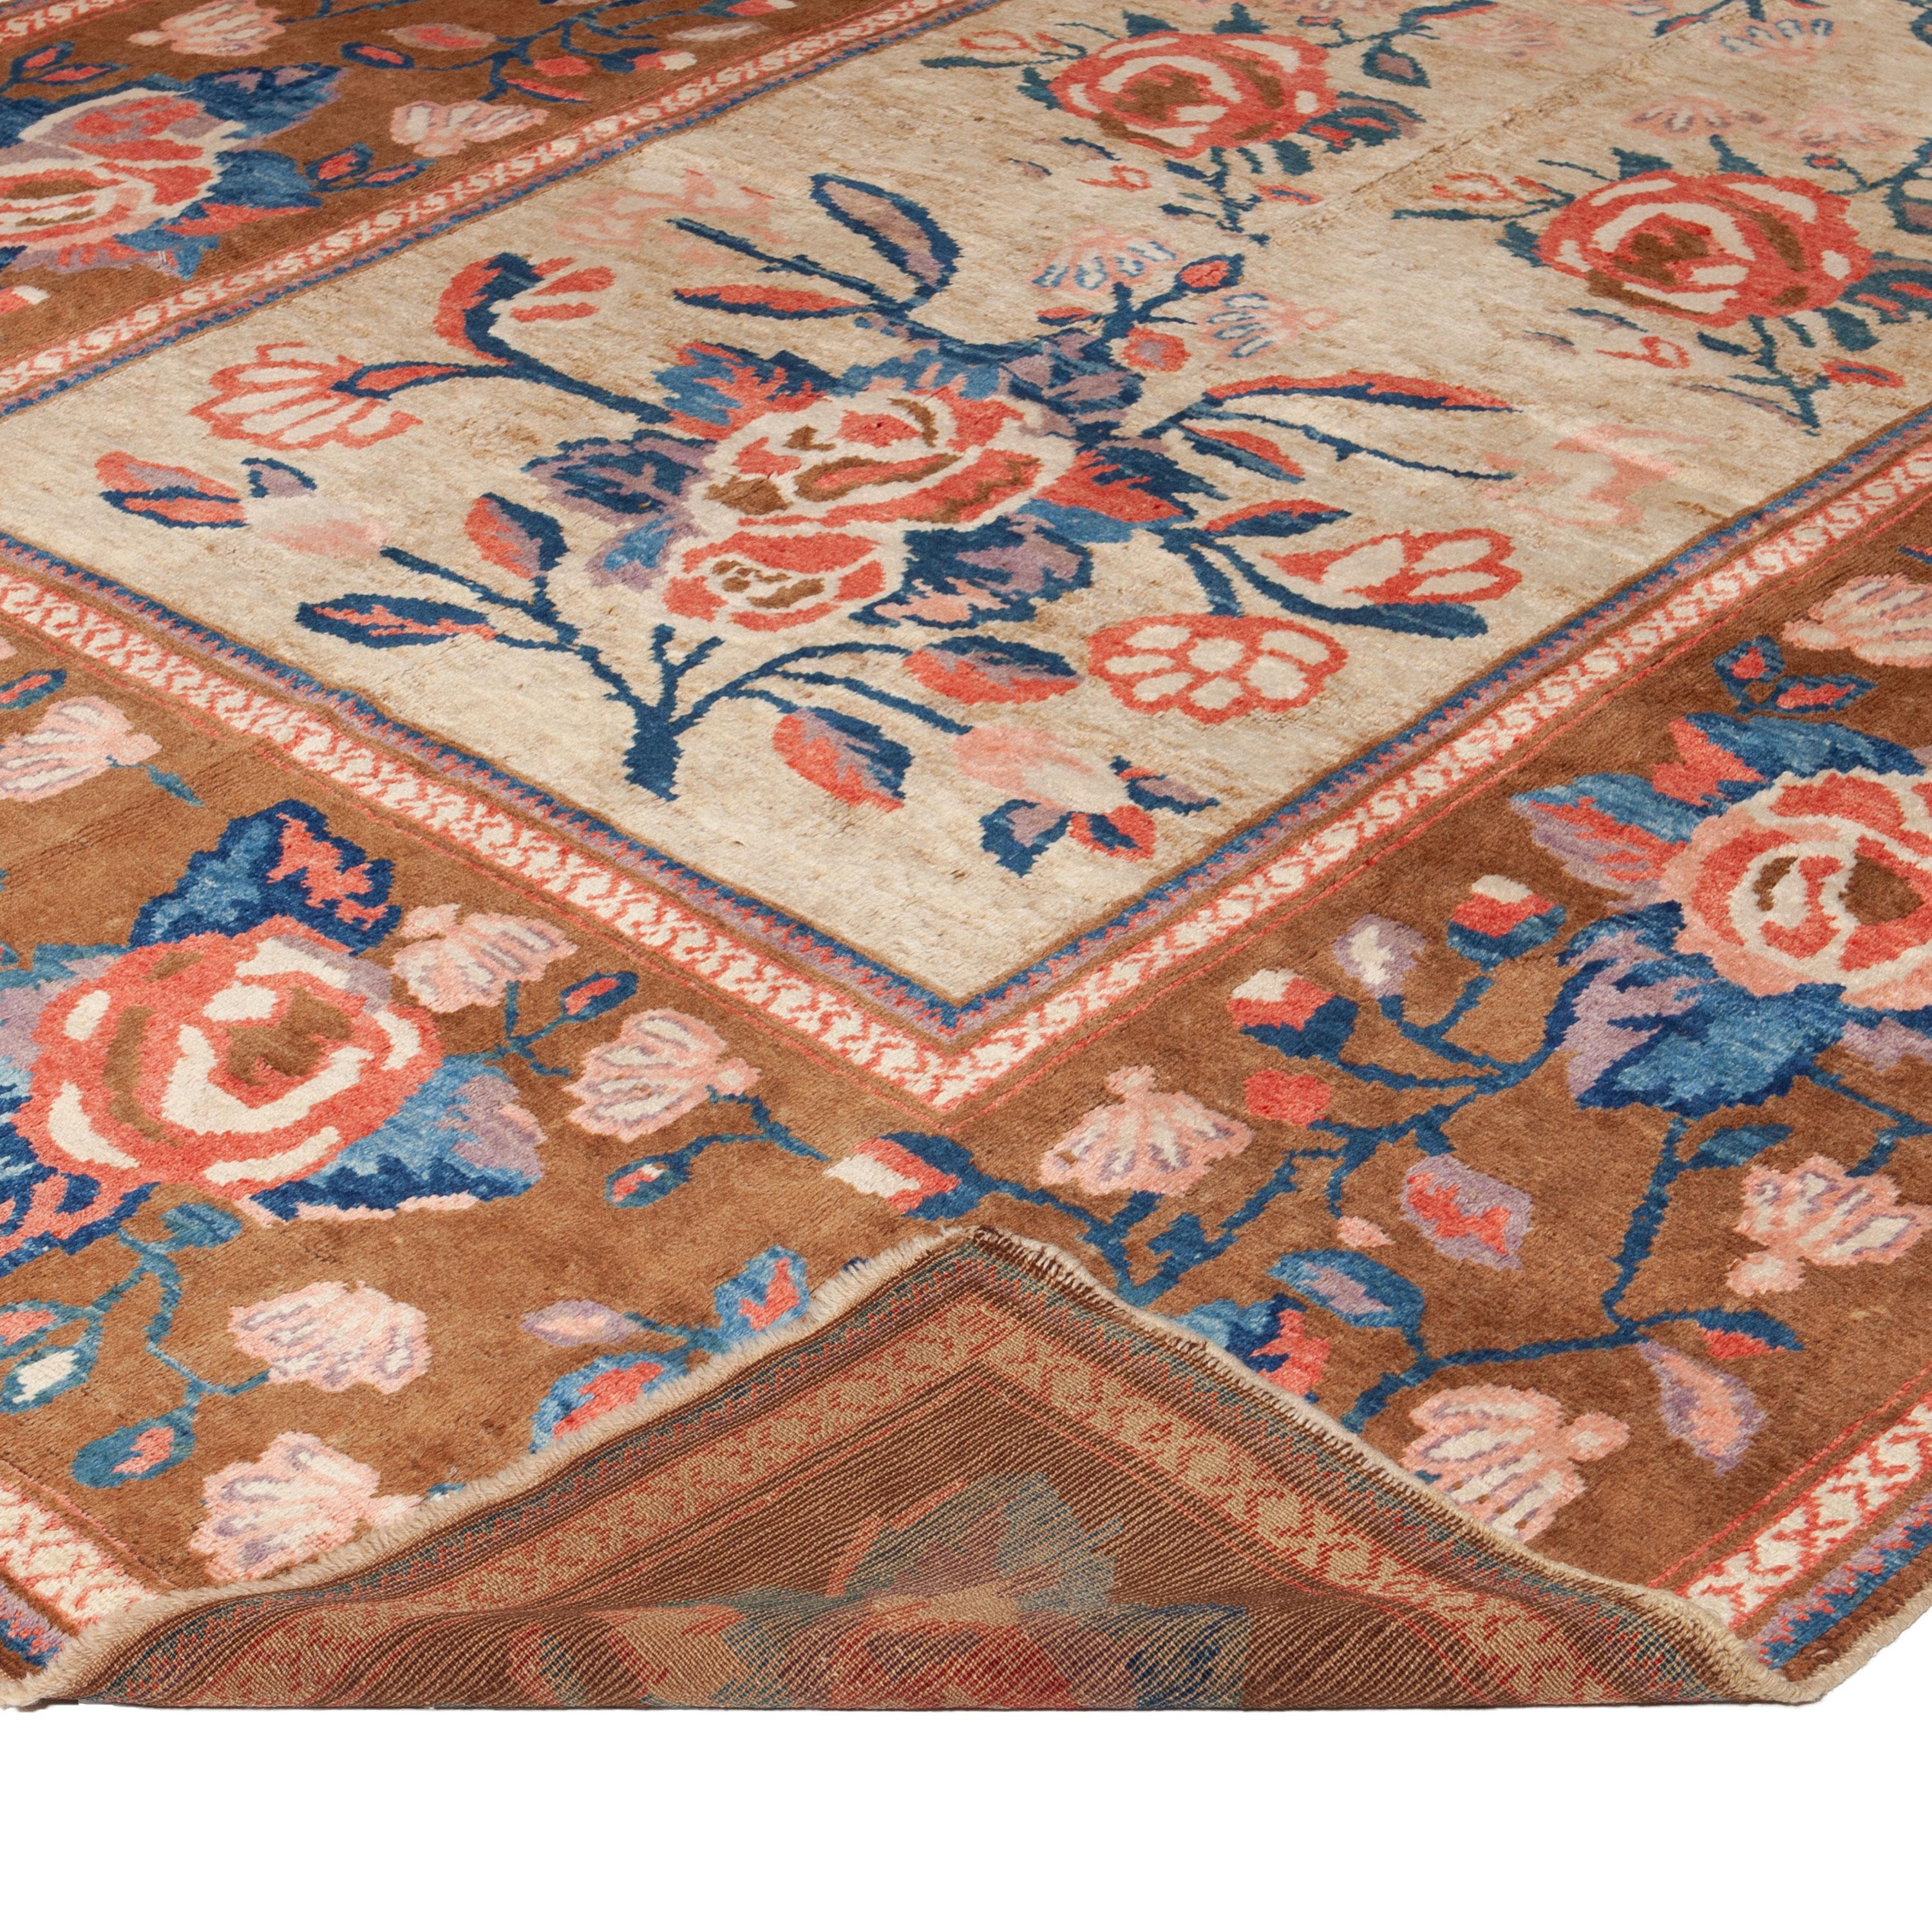 Hand-Knotted abc carpet Vintage Traditional Karabagh Rug - 8' x 11'9